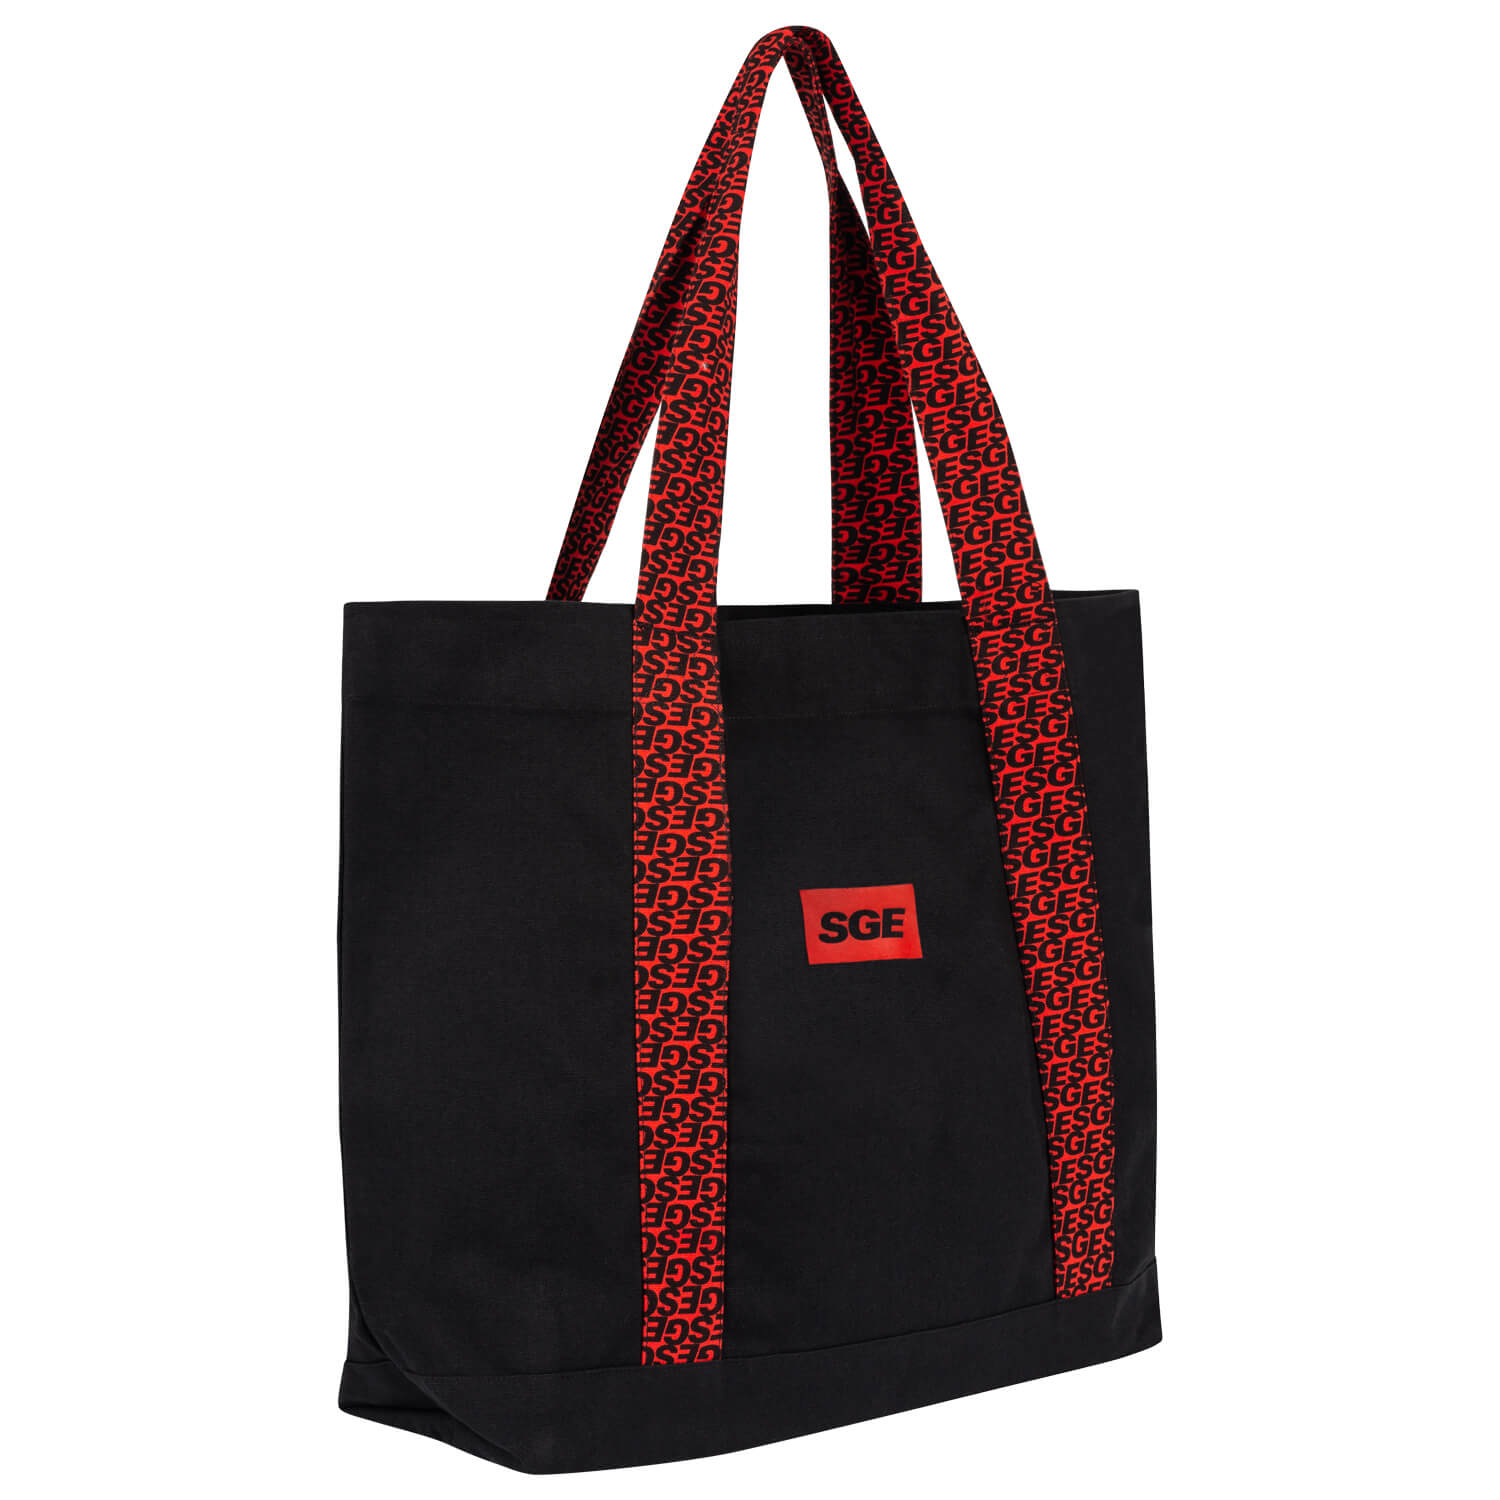 Bild 4: Shopping Bag Red SGE